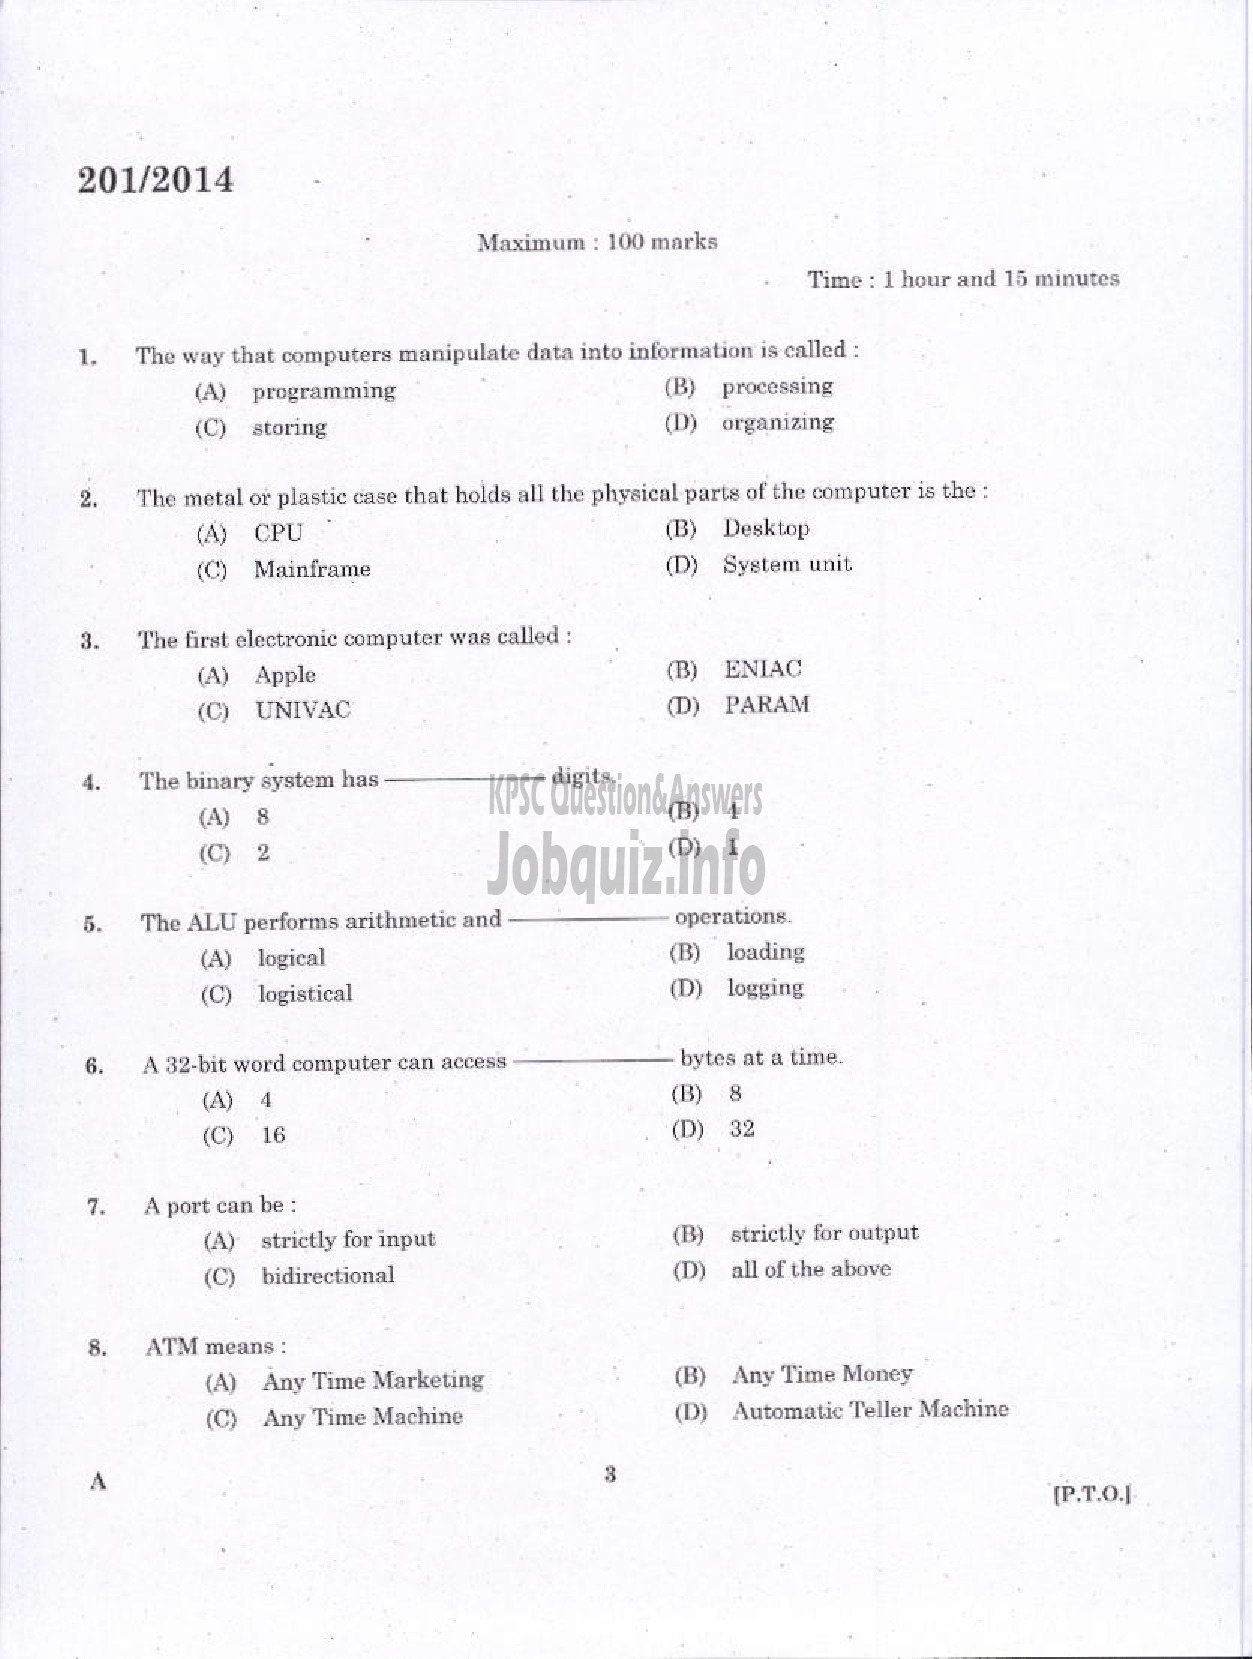 Kerala PSC Question Paper - LABORATORY TECHNICAL ASSISTANT COMPUTER APPLICATION VHSE-1